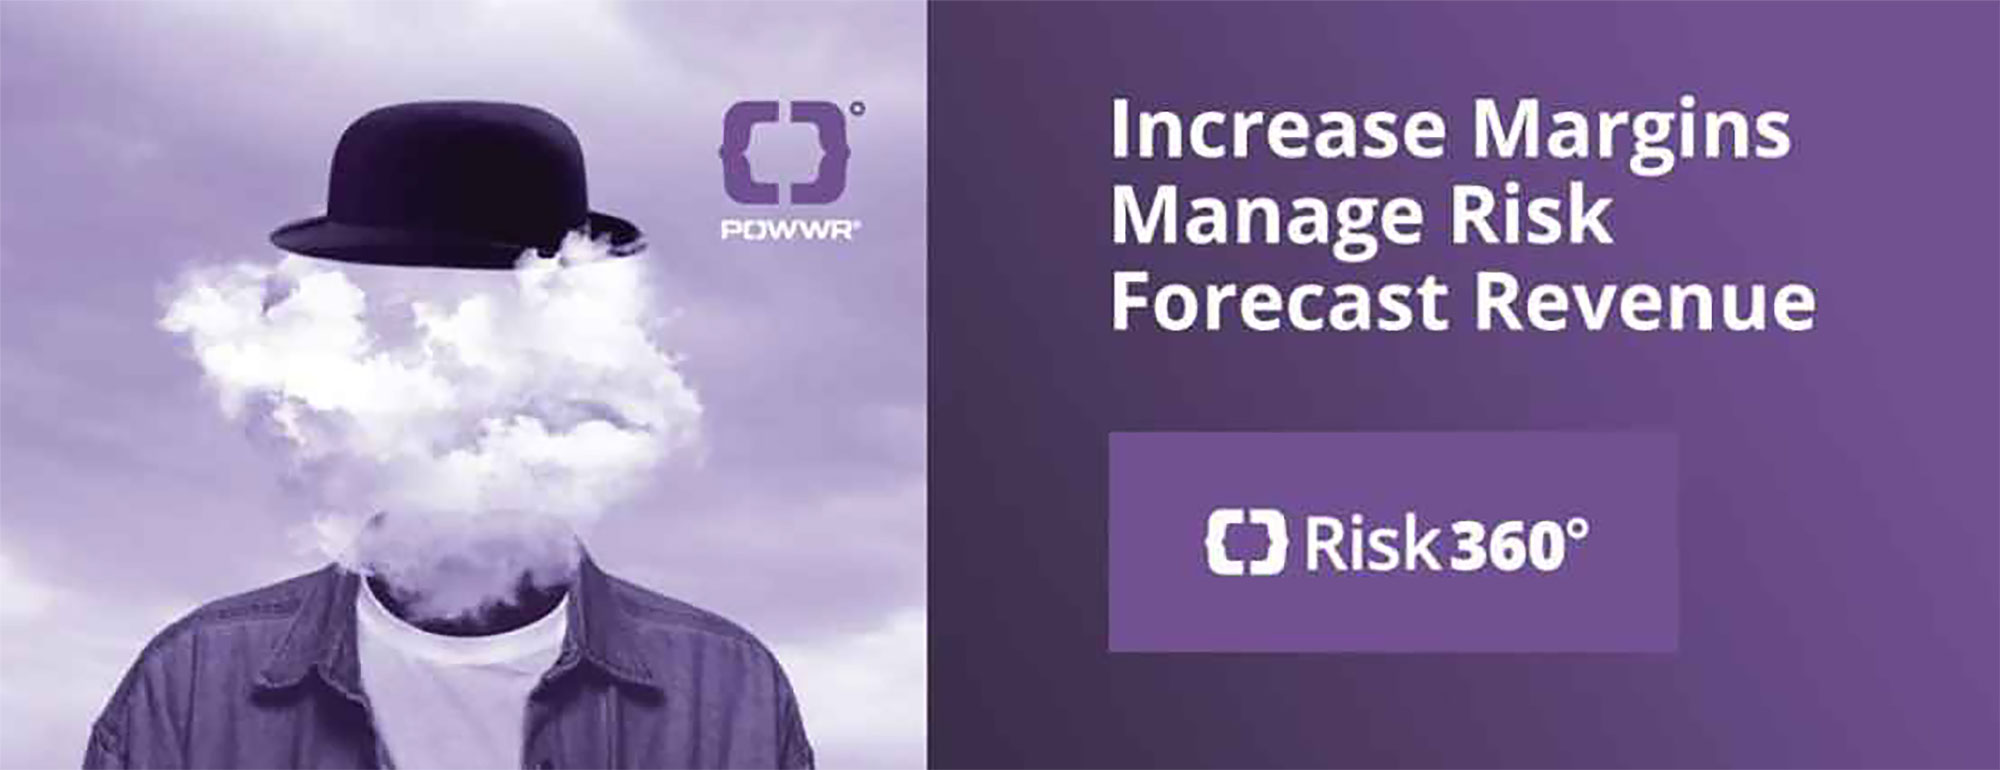 Increase Margins Manage Risk Forecast Revenue